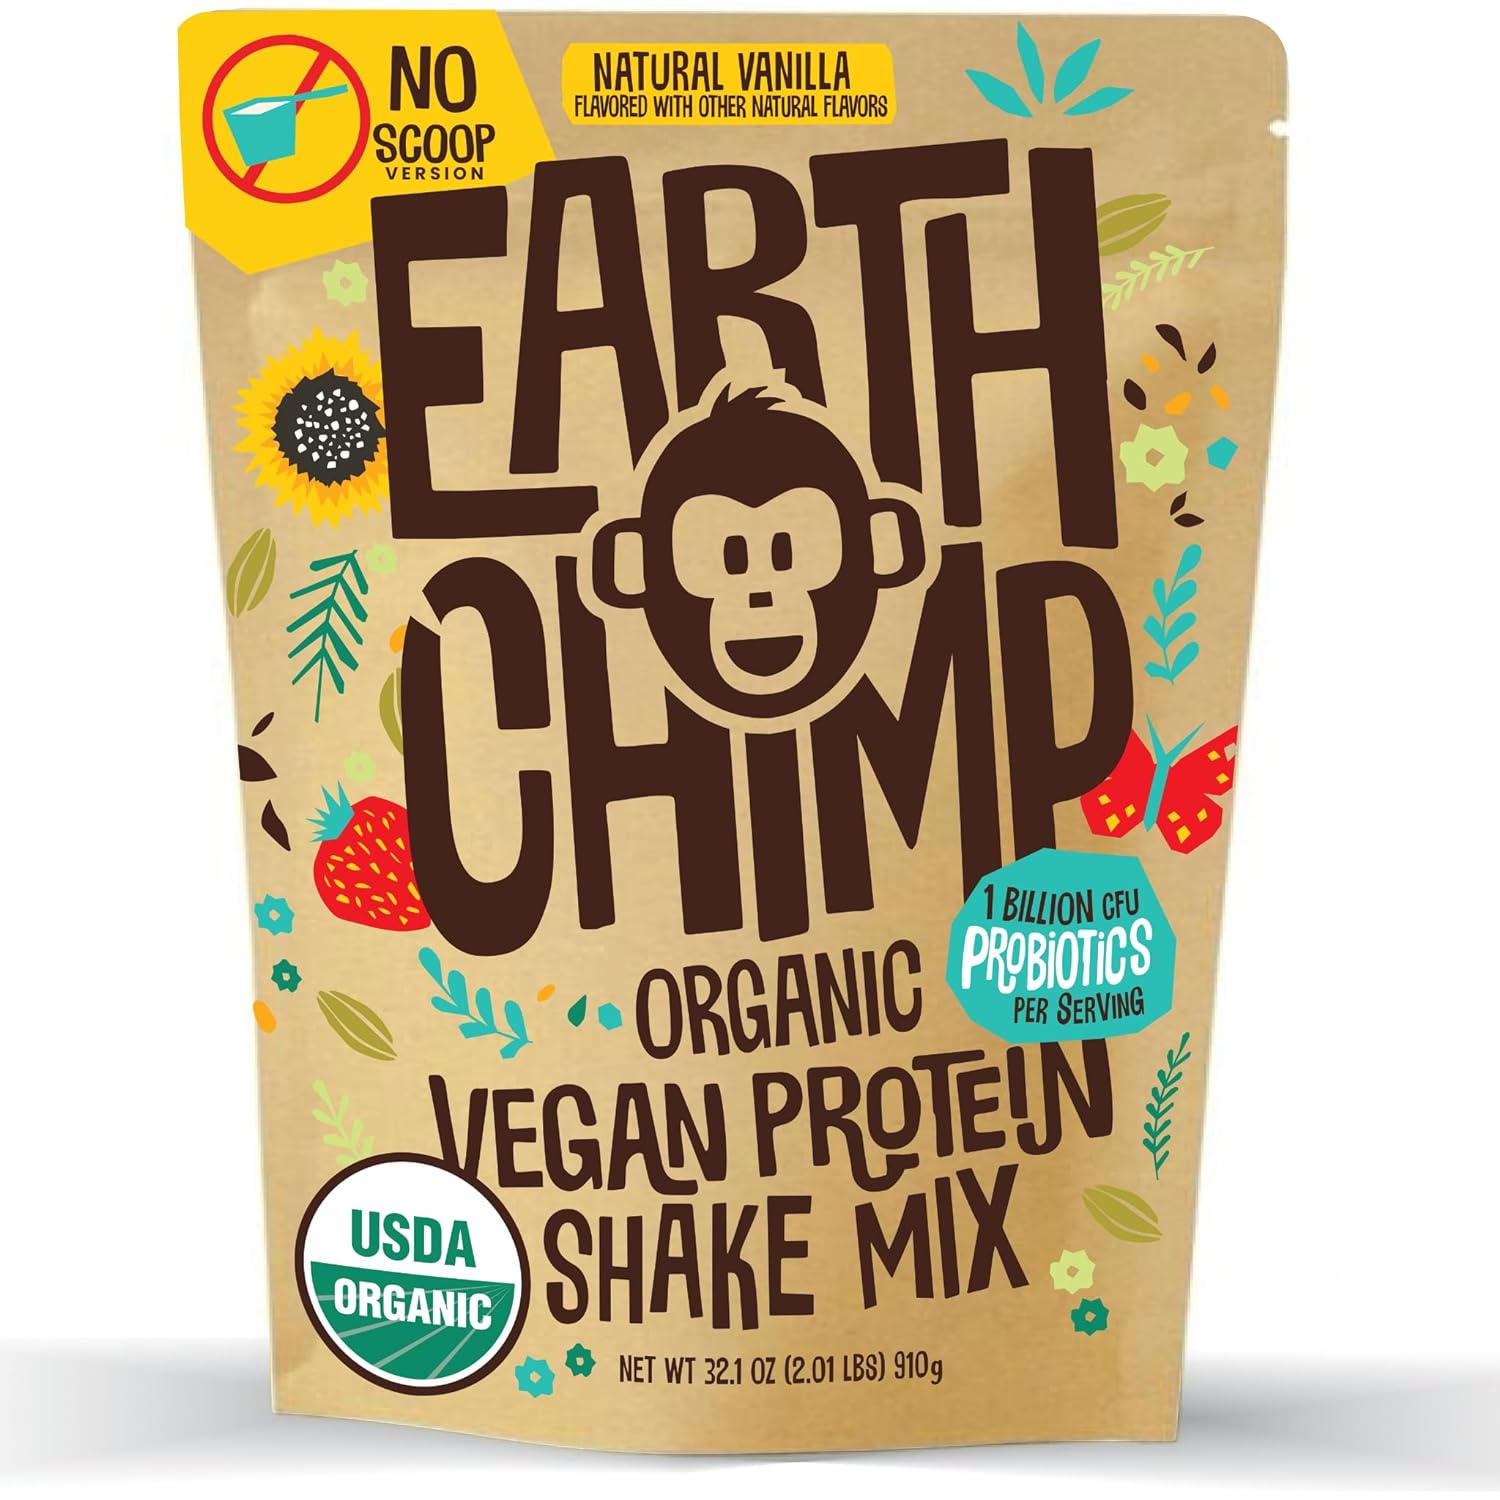 EarthChimp Organic Vegan Protein Powder - with Probiotics - Non GMO, Dairy Free, Non Whey, Plant Based Protein Powder for Women and Men, Gluten Free - 26 Servings 32 Oz (Vanilla) No Scoop